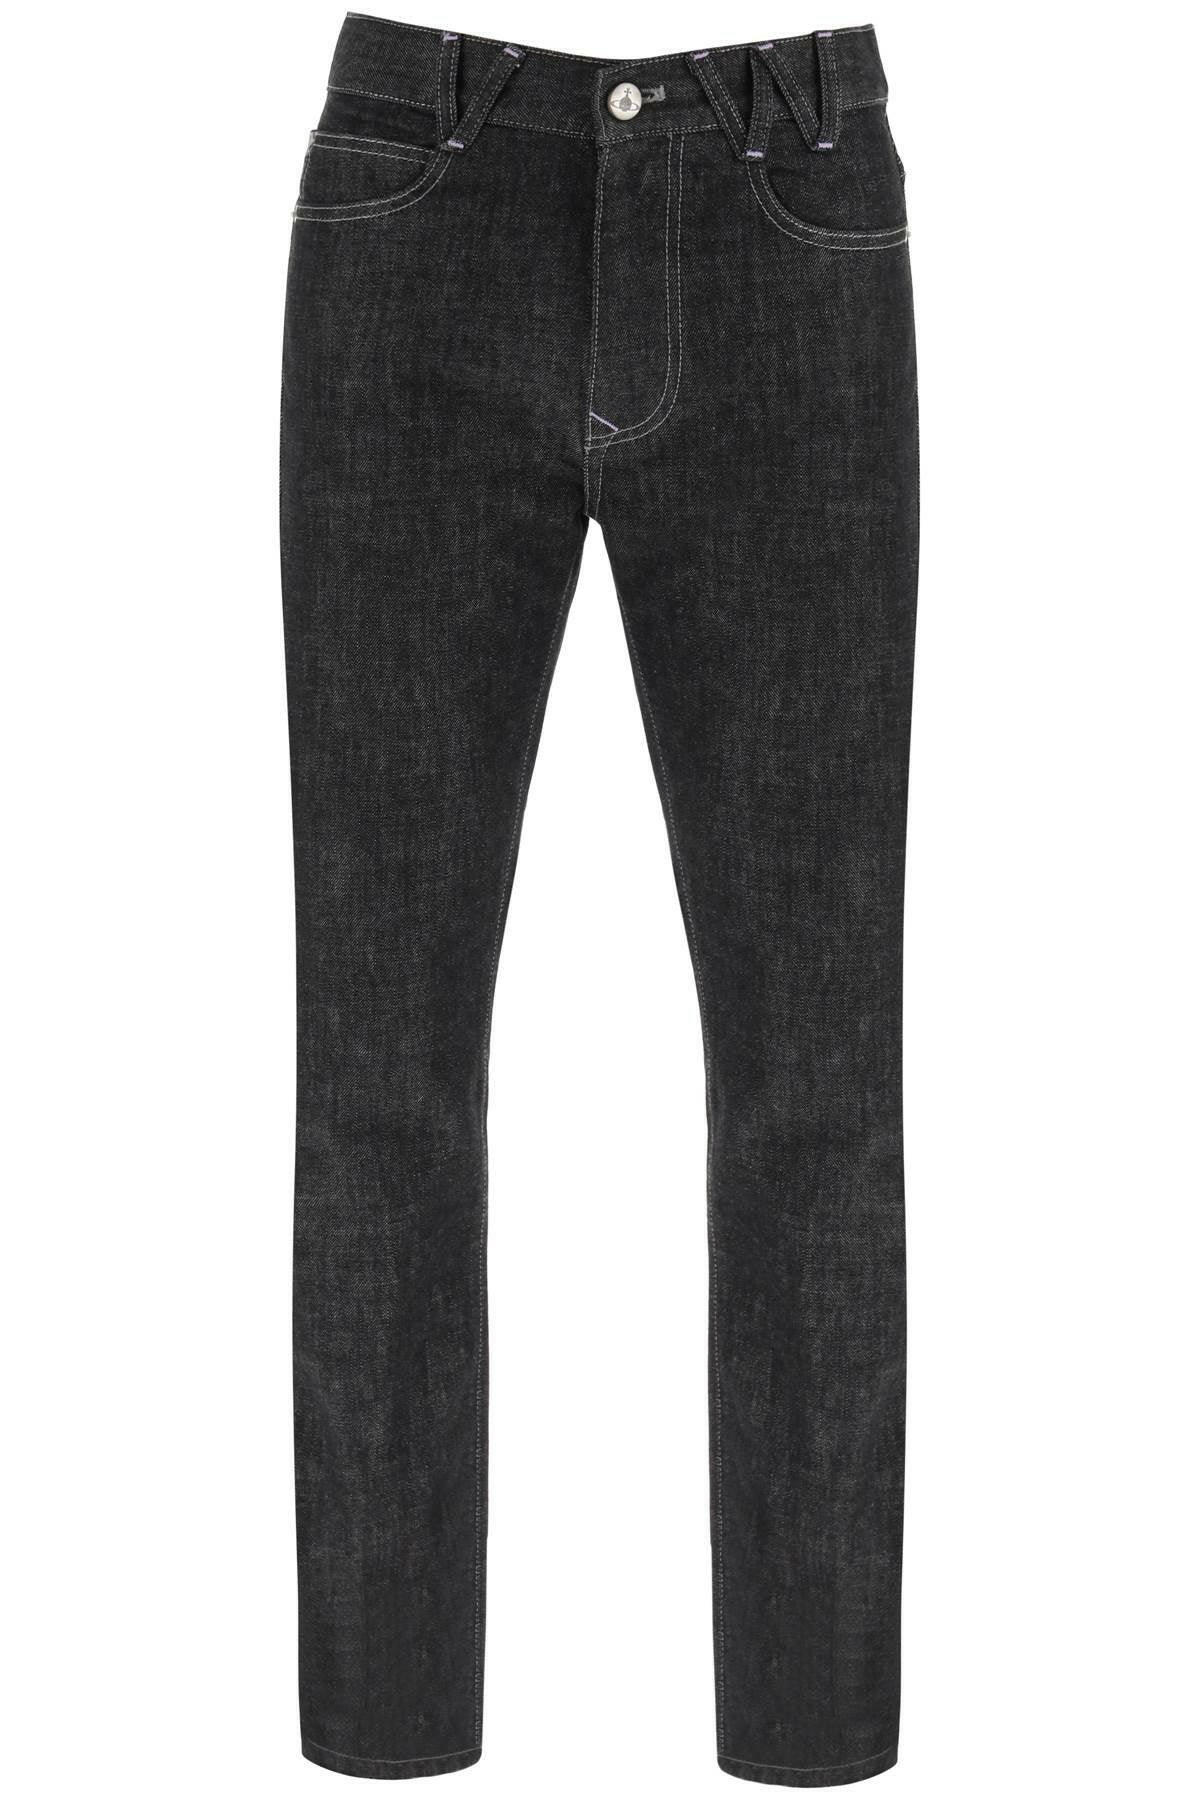 Vivienne Westwood Organic Cotton Jeans - JOHN JULIA